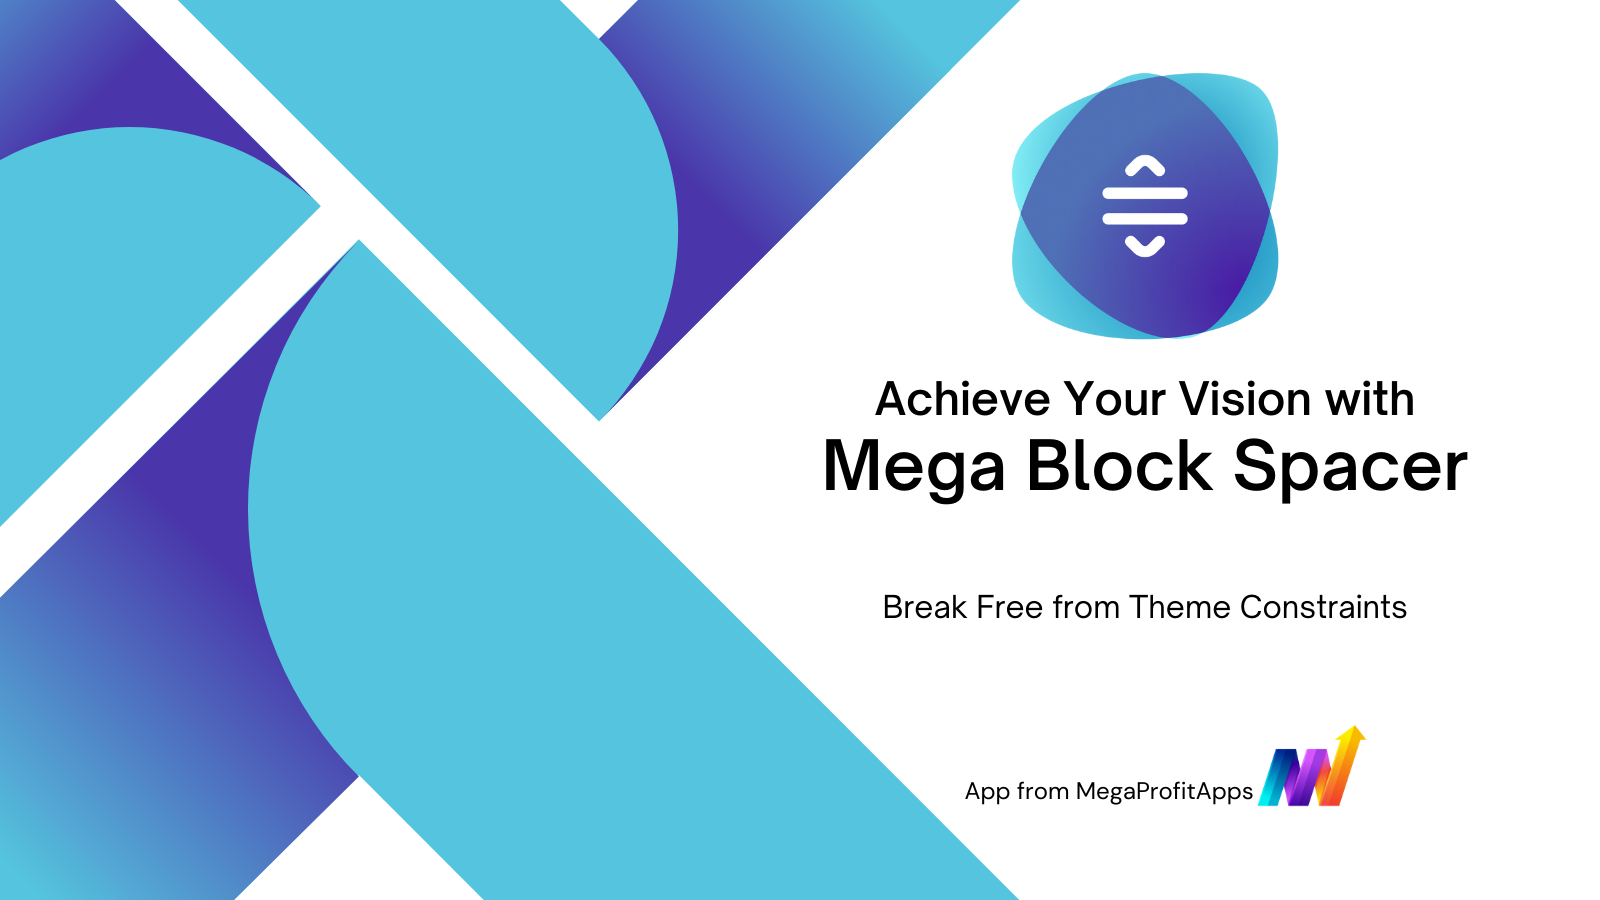 Mega Block Spacer - Break free from theme constrains